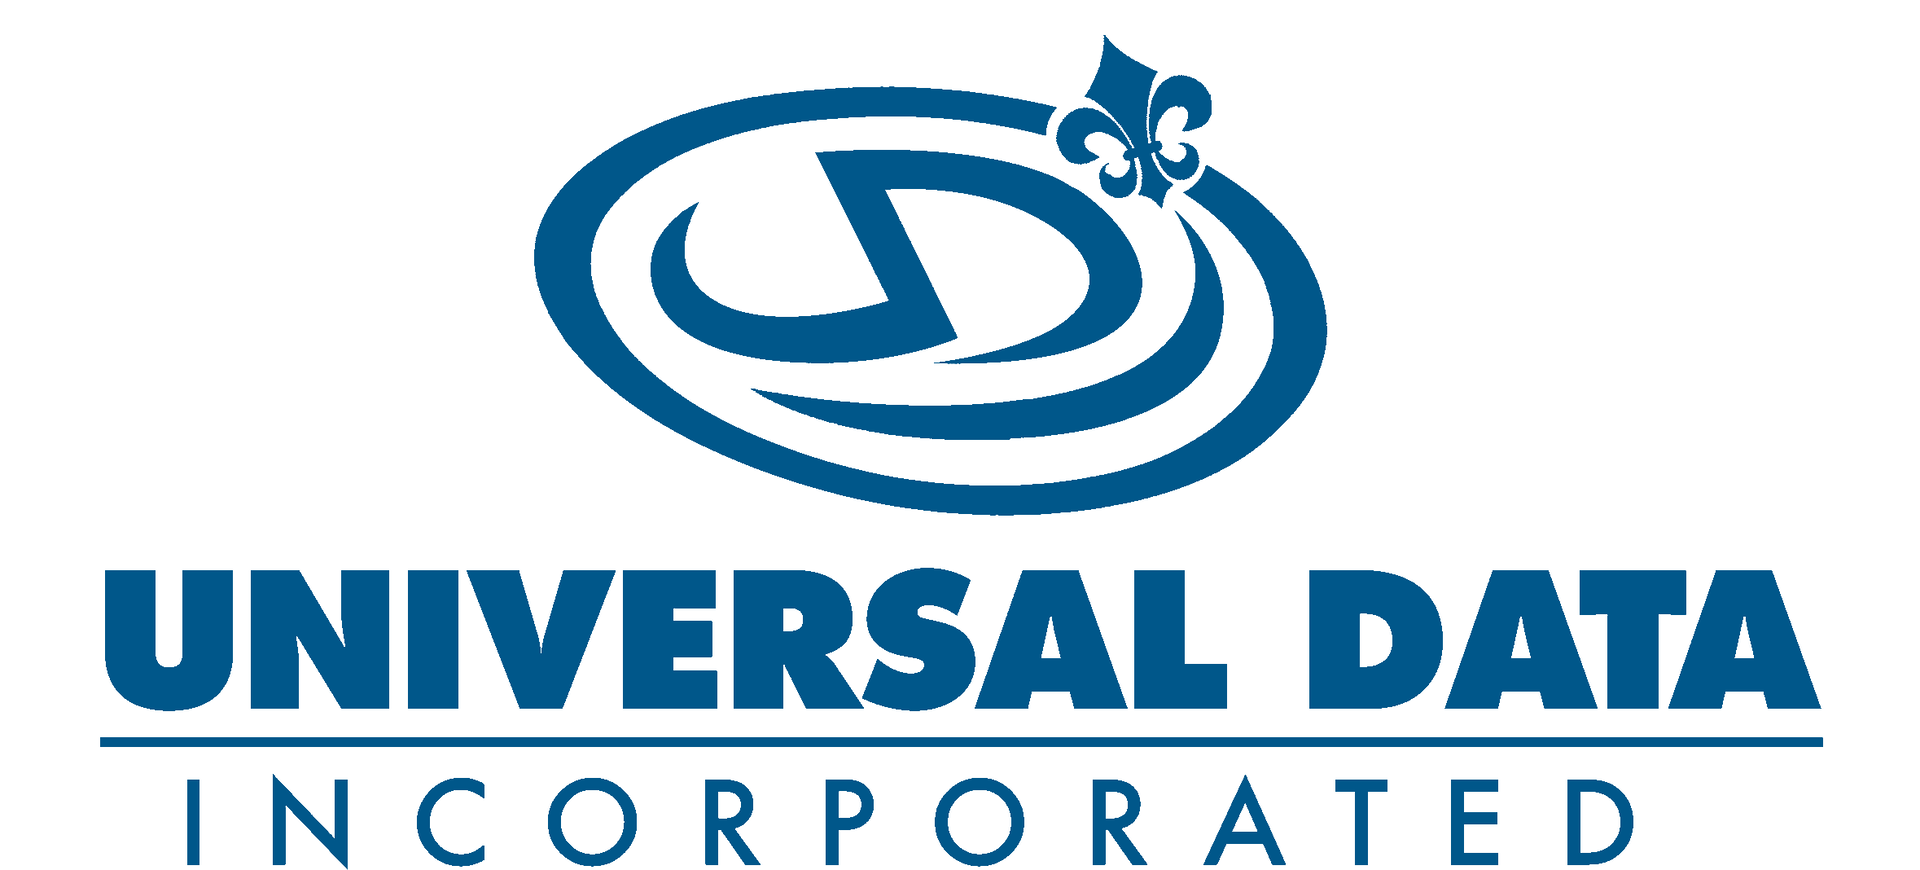 Universal Data, Inc.